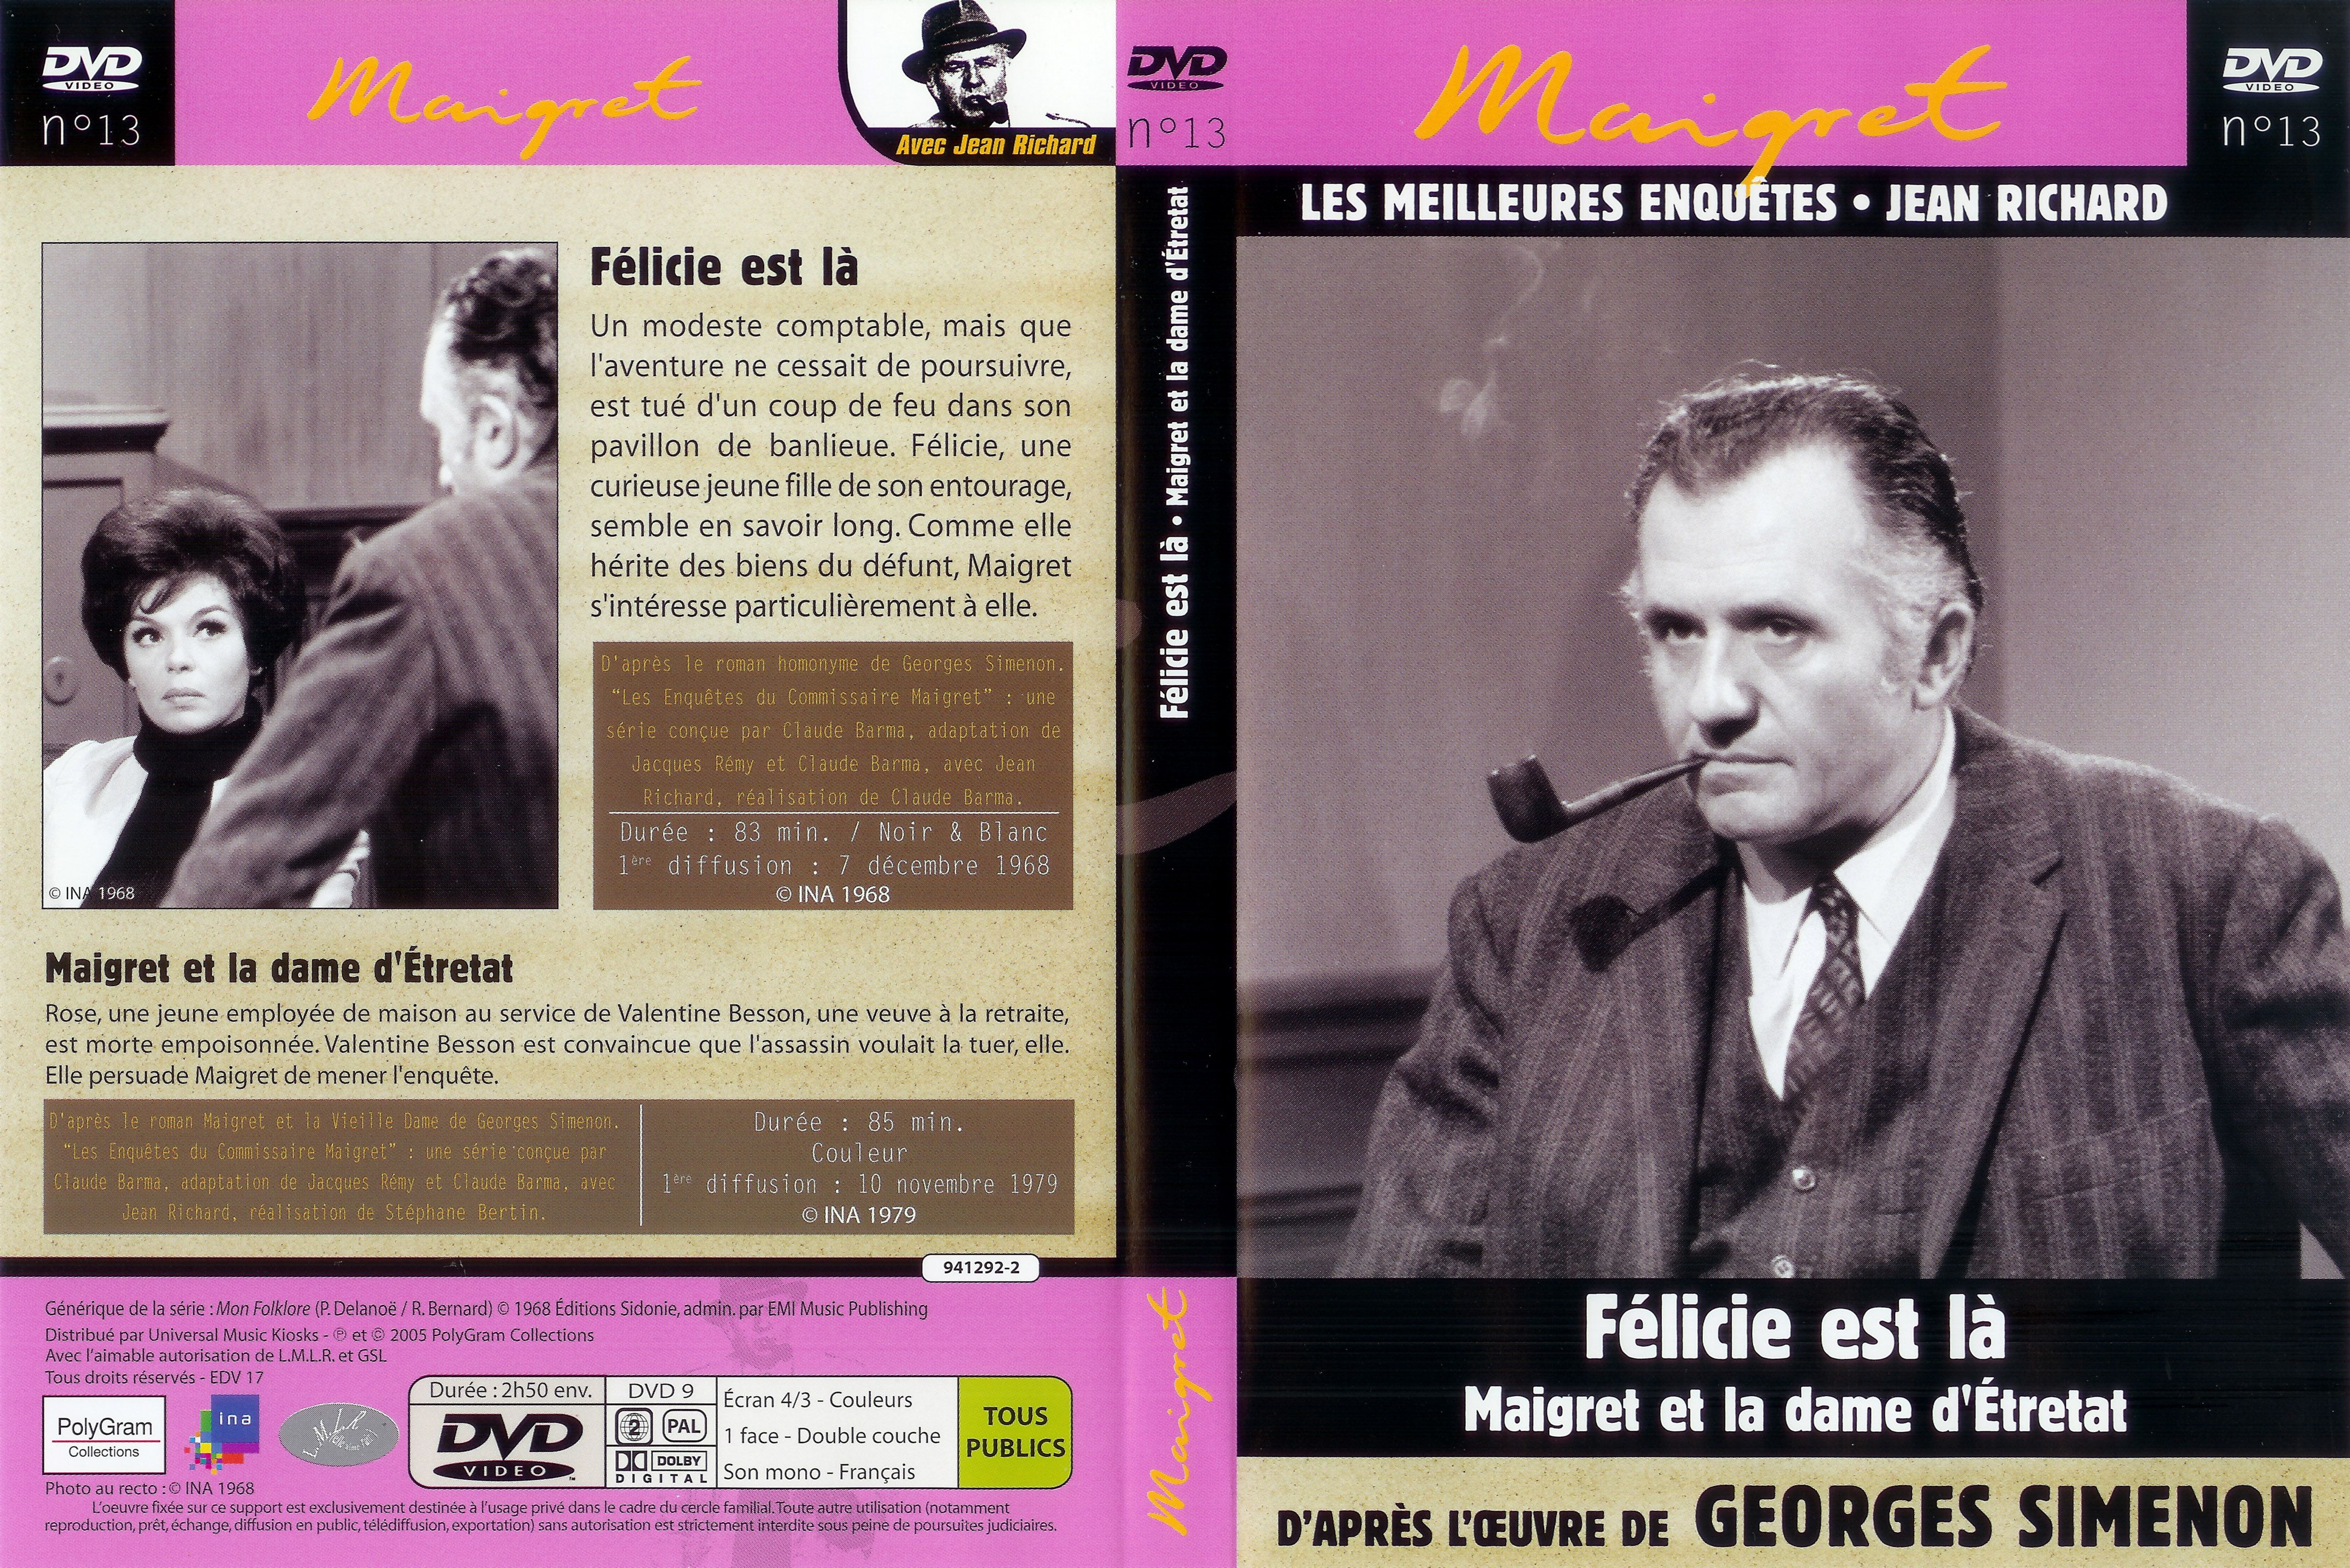 Jaquette DVD Maigret (Jean Richard) vol 13